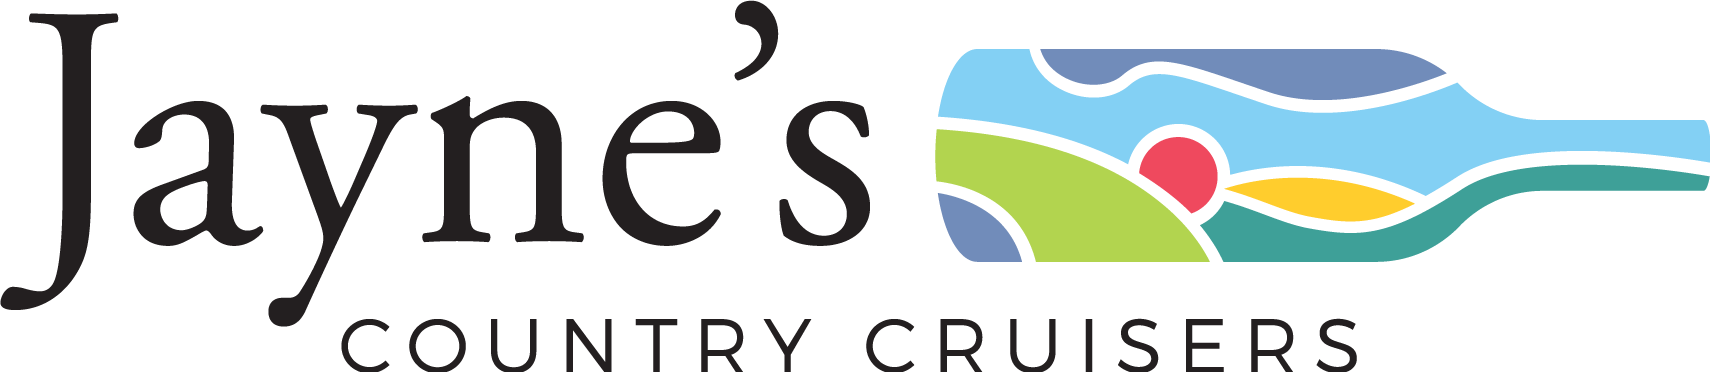 Jayne's Country Cruisers logo